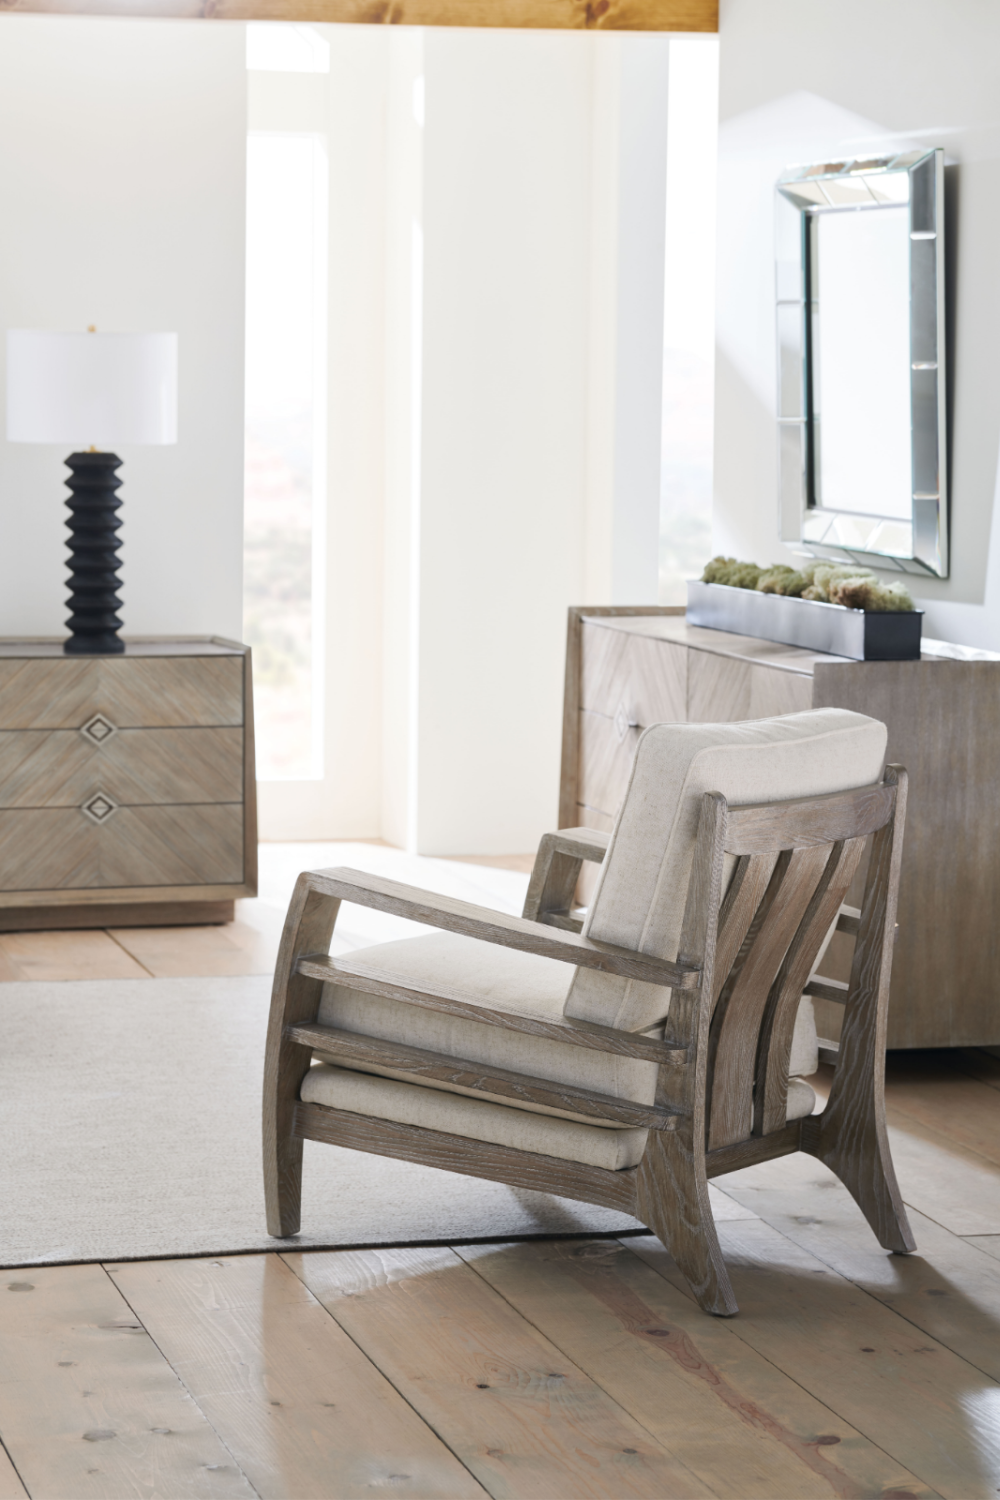 Wooden Cushioned Lounge Chair | Caracole Slatitude | Oroa.com